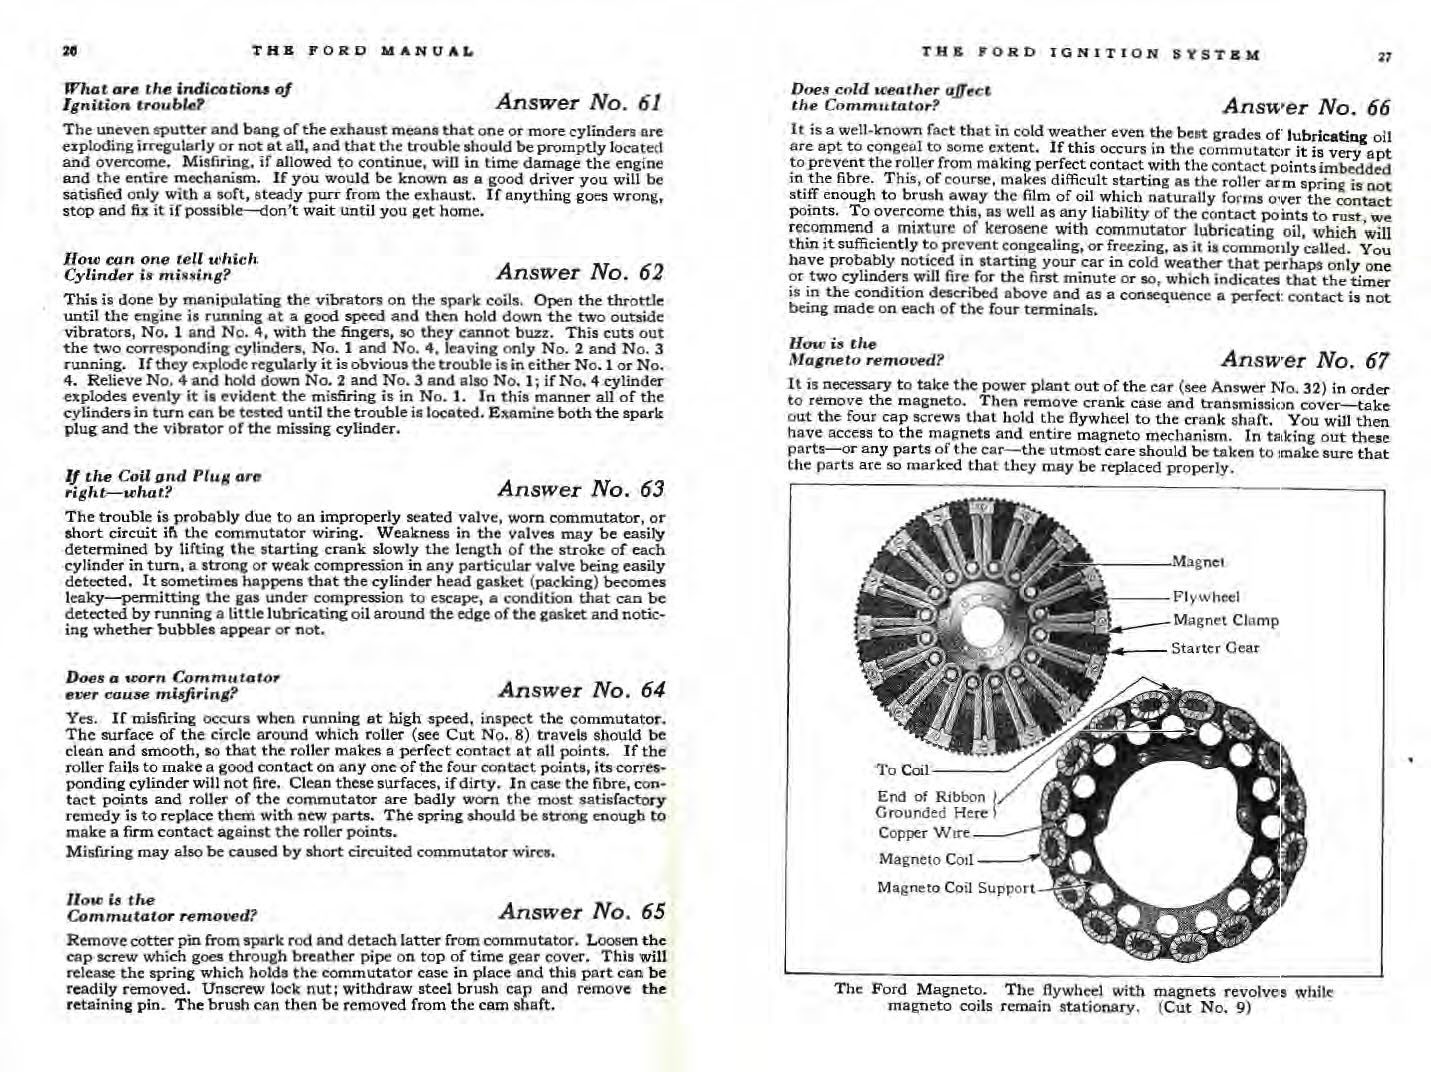 n_1926 Ford Owners Manual-26-27.jpg